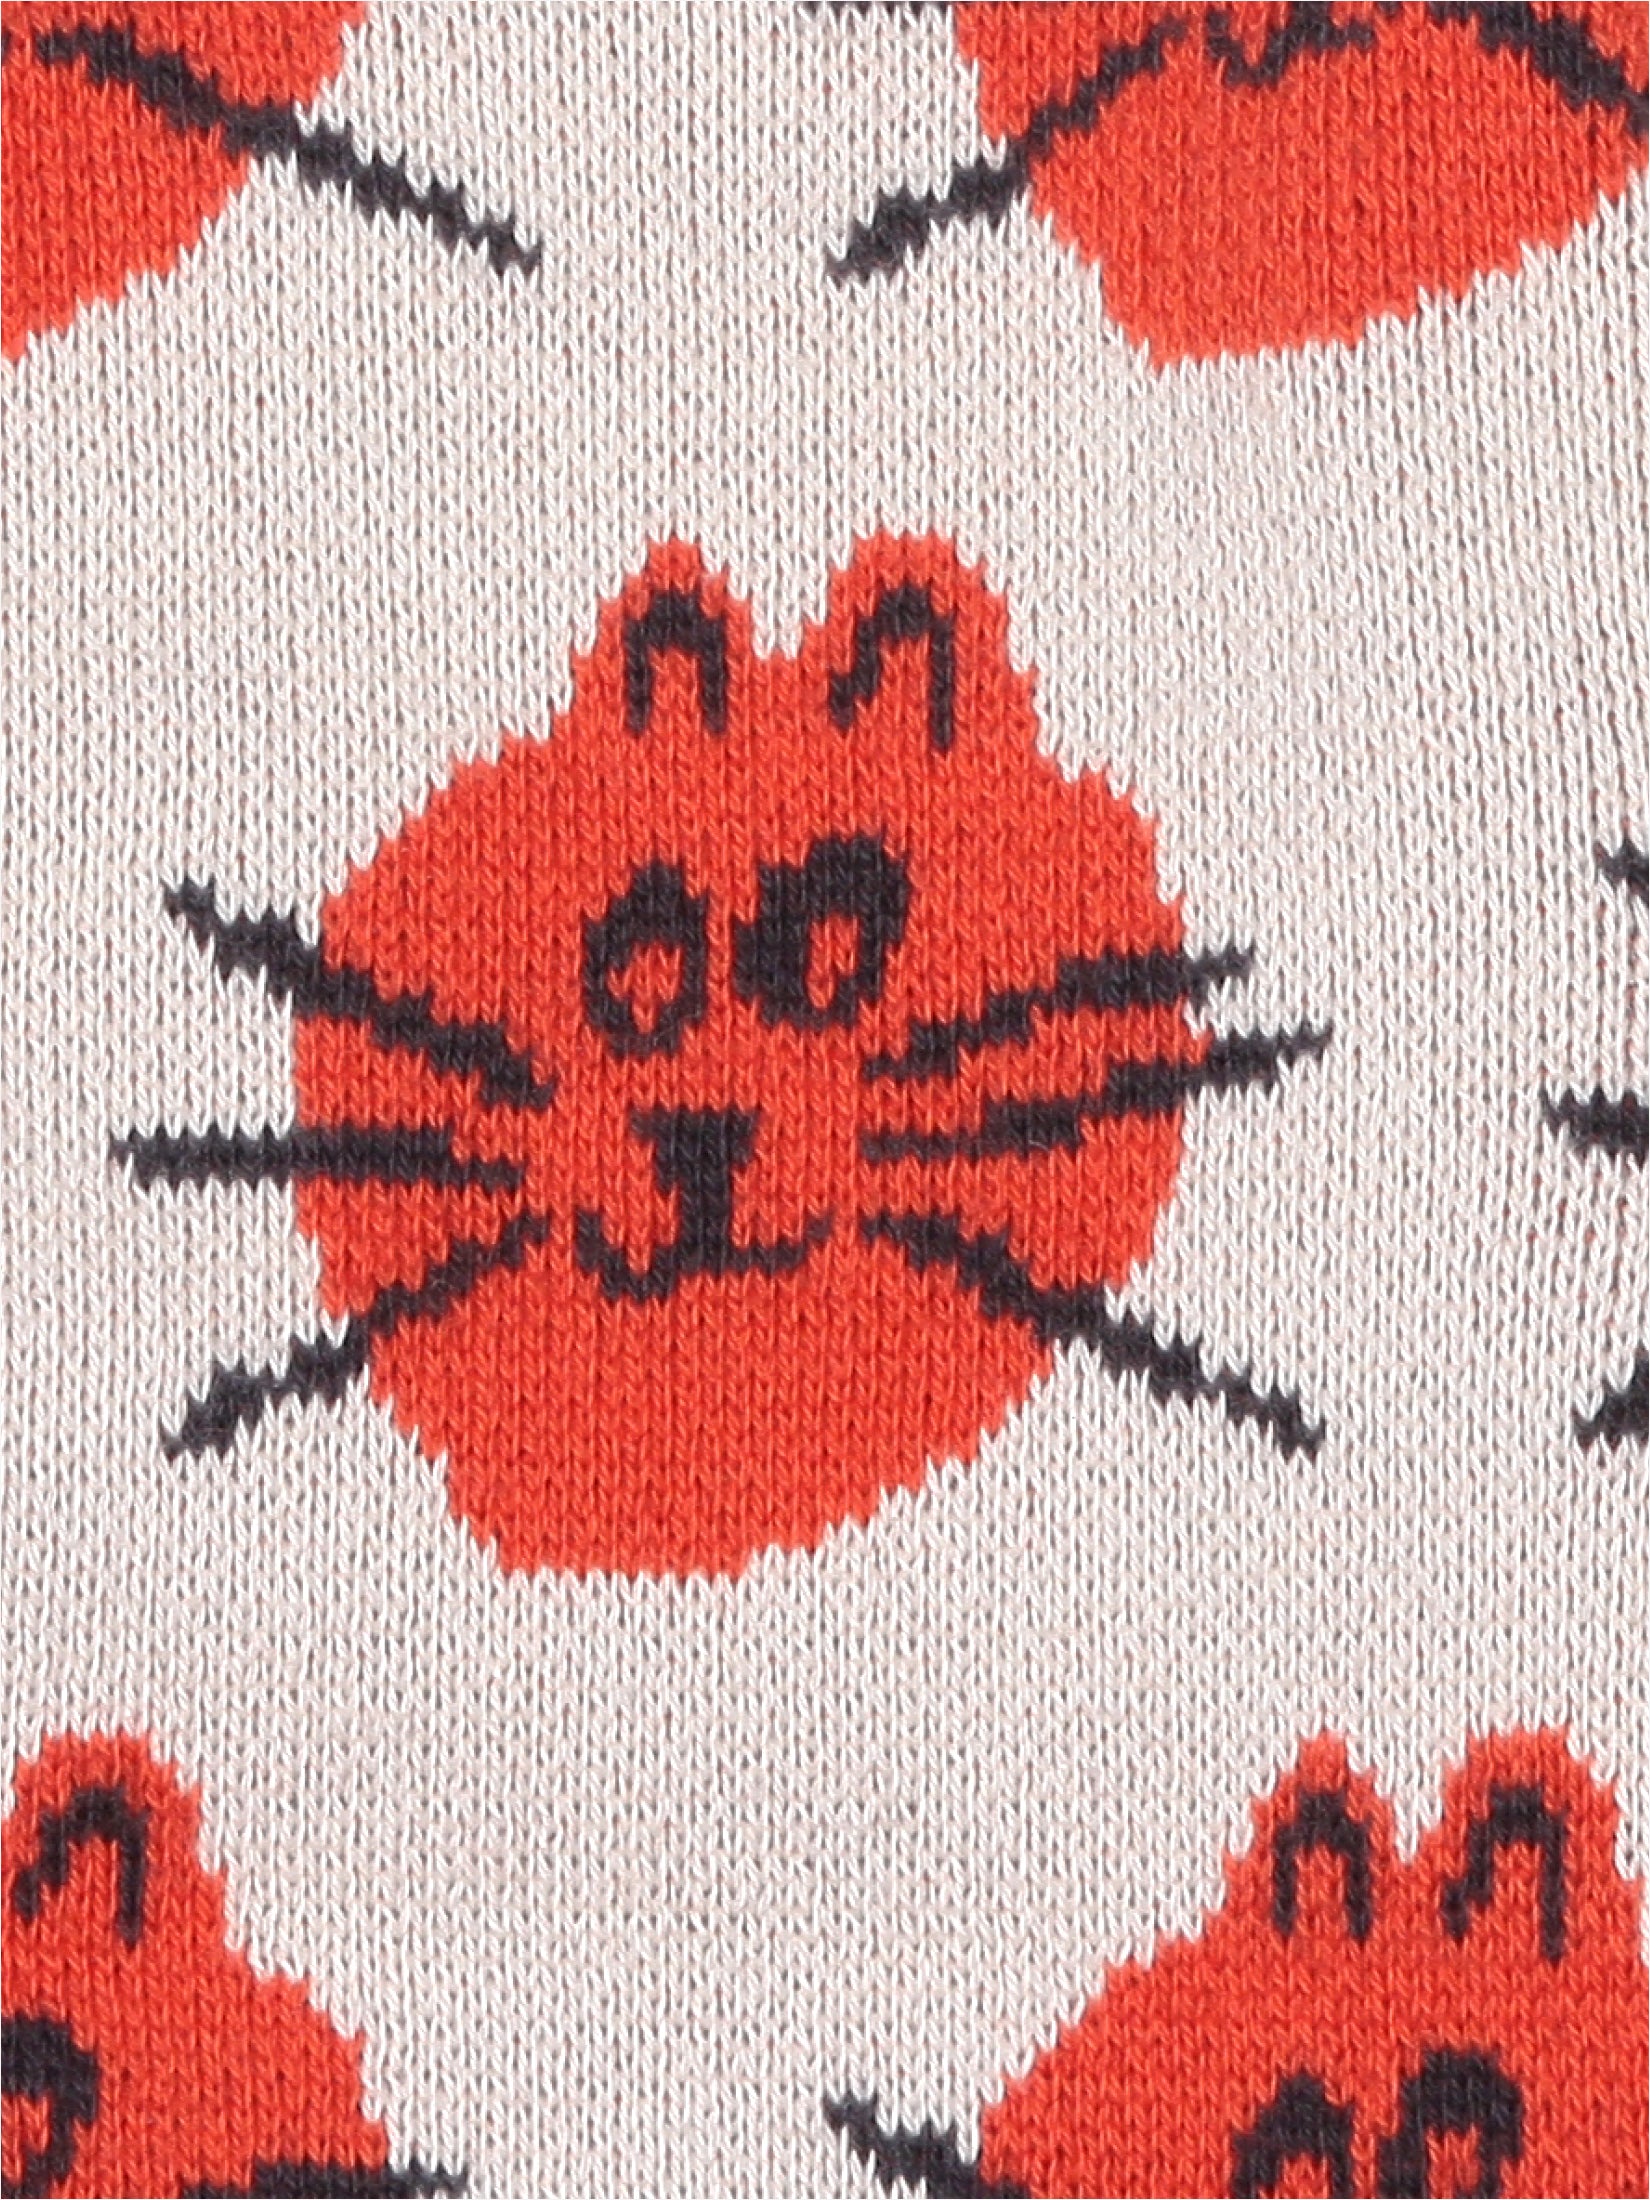 Rose Tan Cat Jacquard Fun Knitted Sock